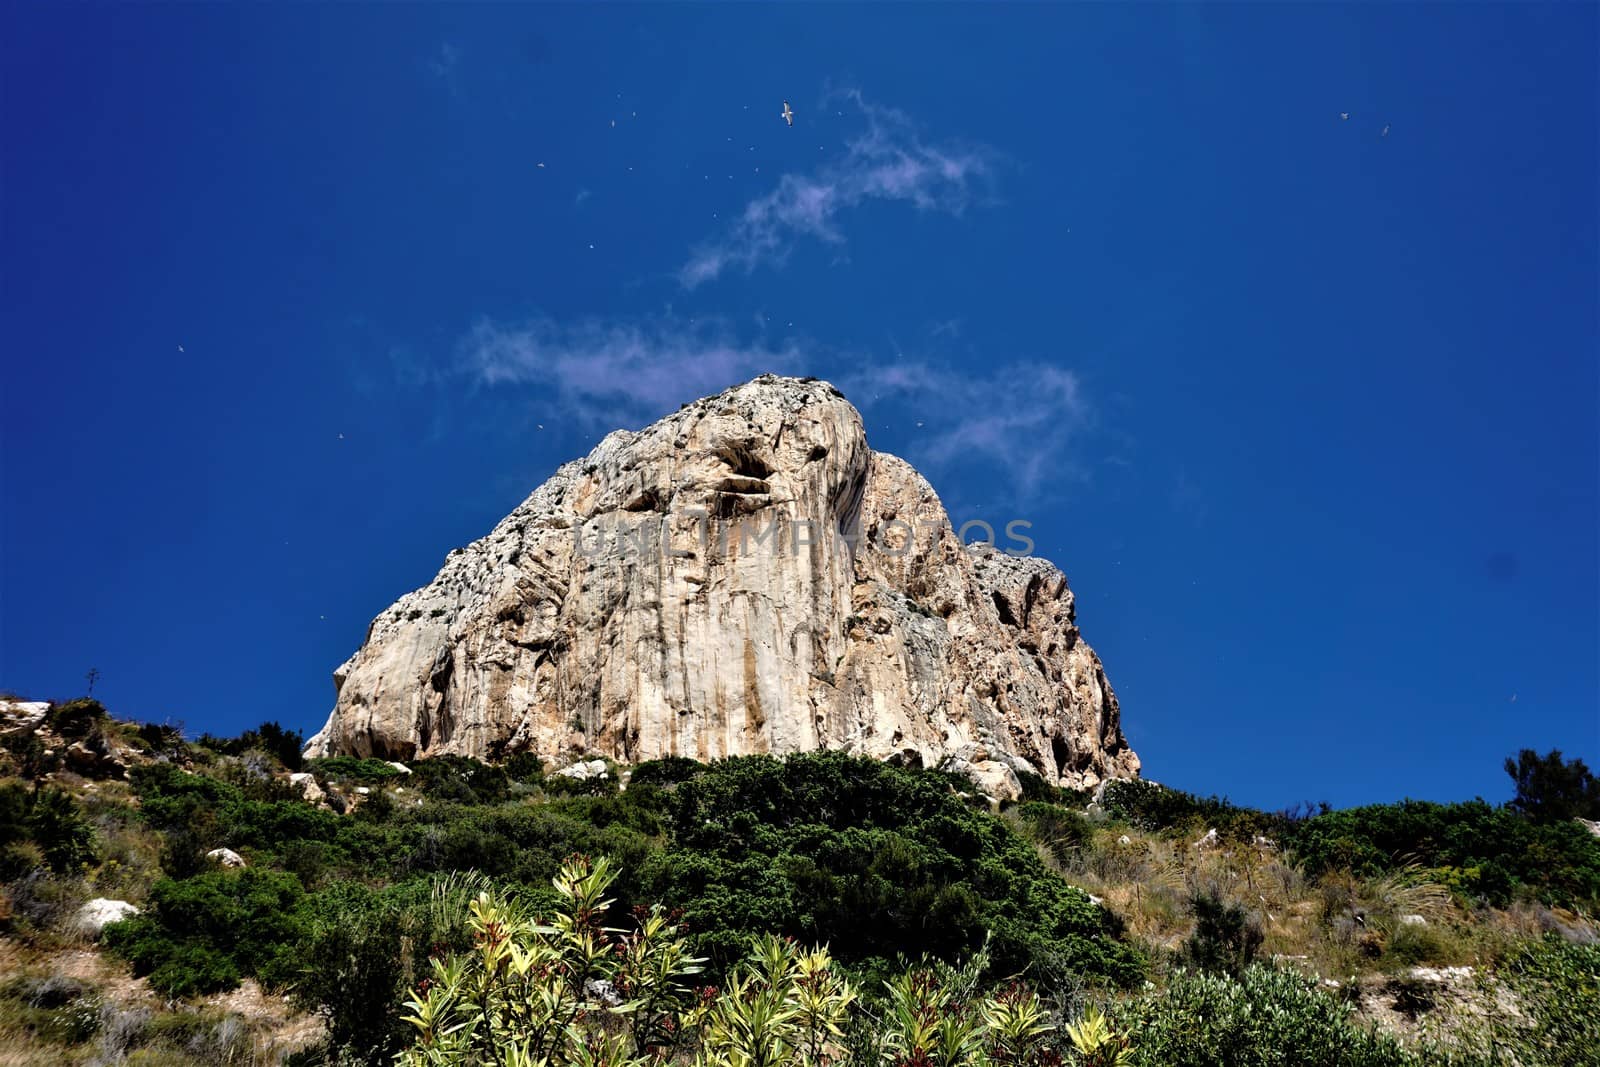 The impressive Ifac mountain in Calpe, Spain